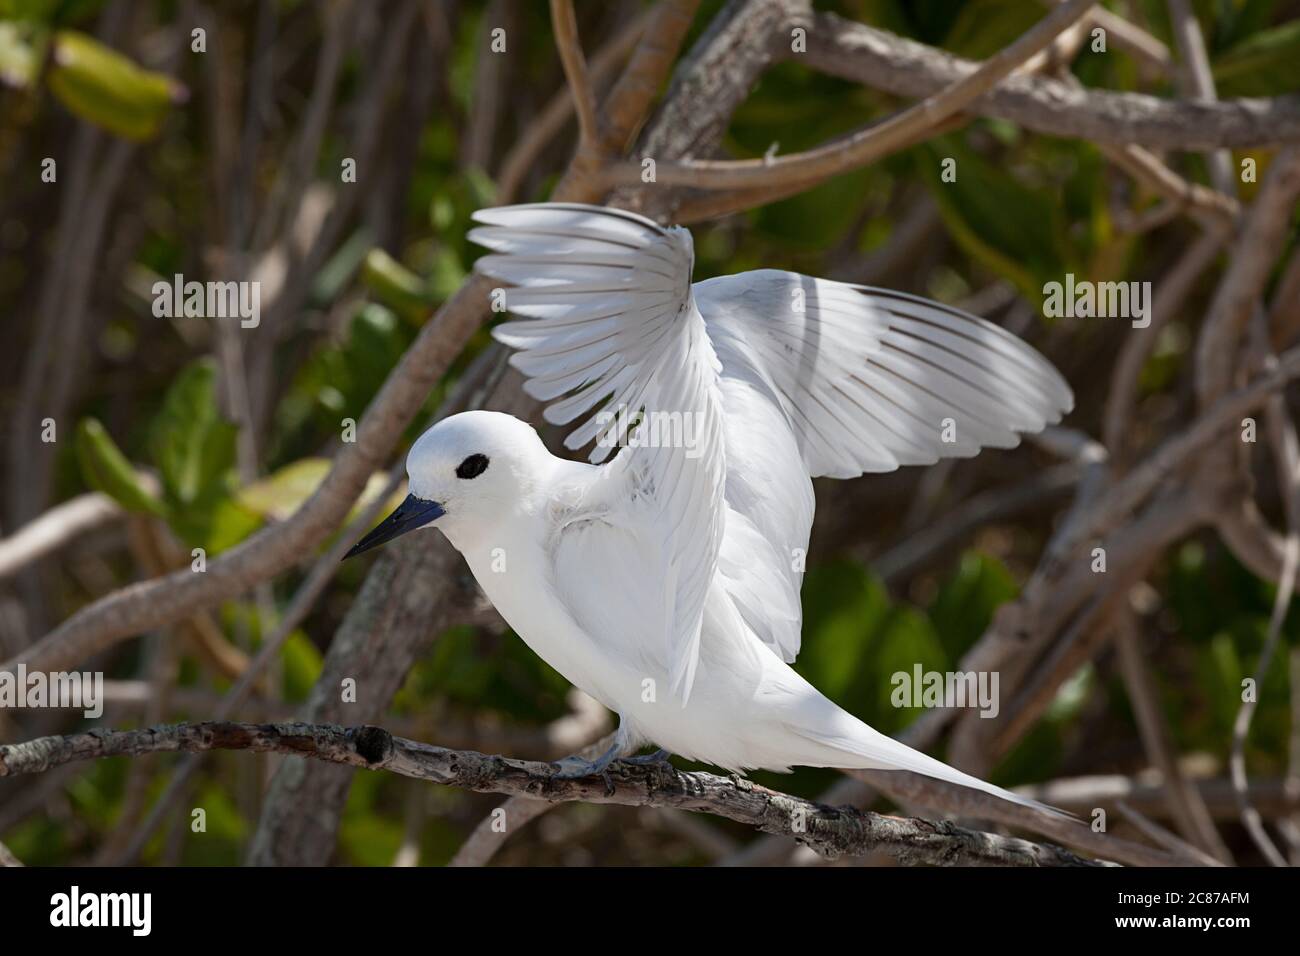 Terna bianca o terna fata, Gygis alba rothschildi, che si diffonde le sue ali, Isola di sabbia, Midway Atoll National Wildlife Refuge, Papahanaumokuakea MNM, USA Foto Stock